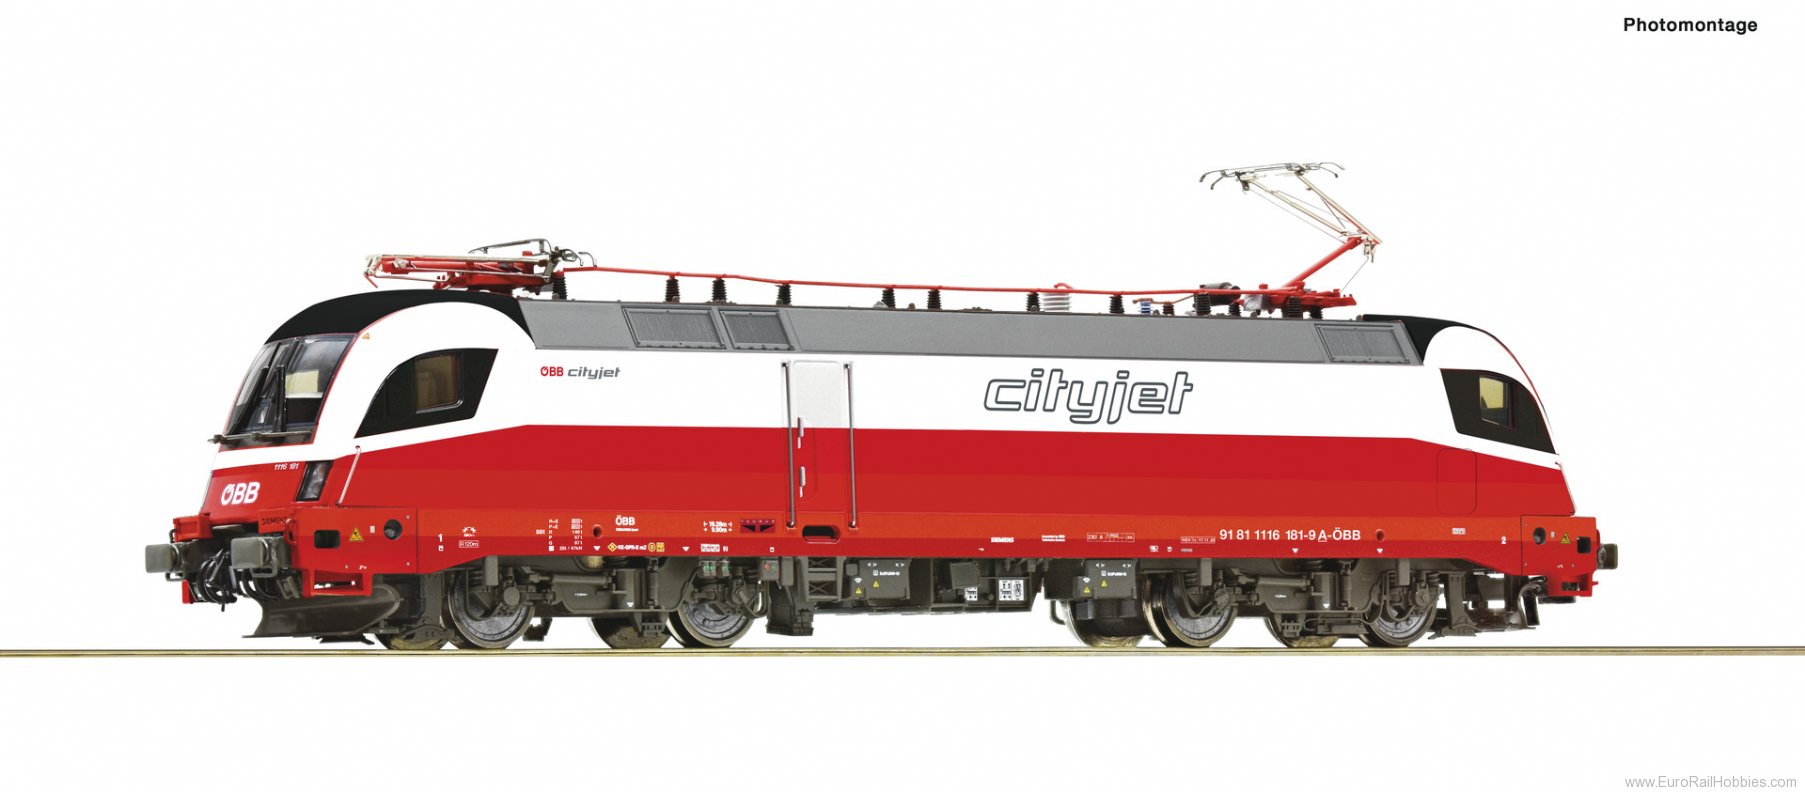 Roco 7510024 Electric locomotive 1116 181-9 ÃBB (Digita